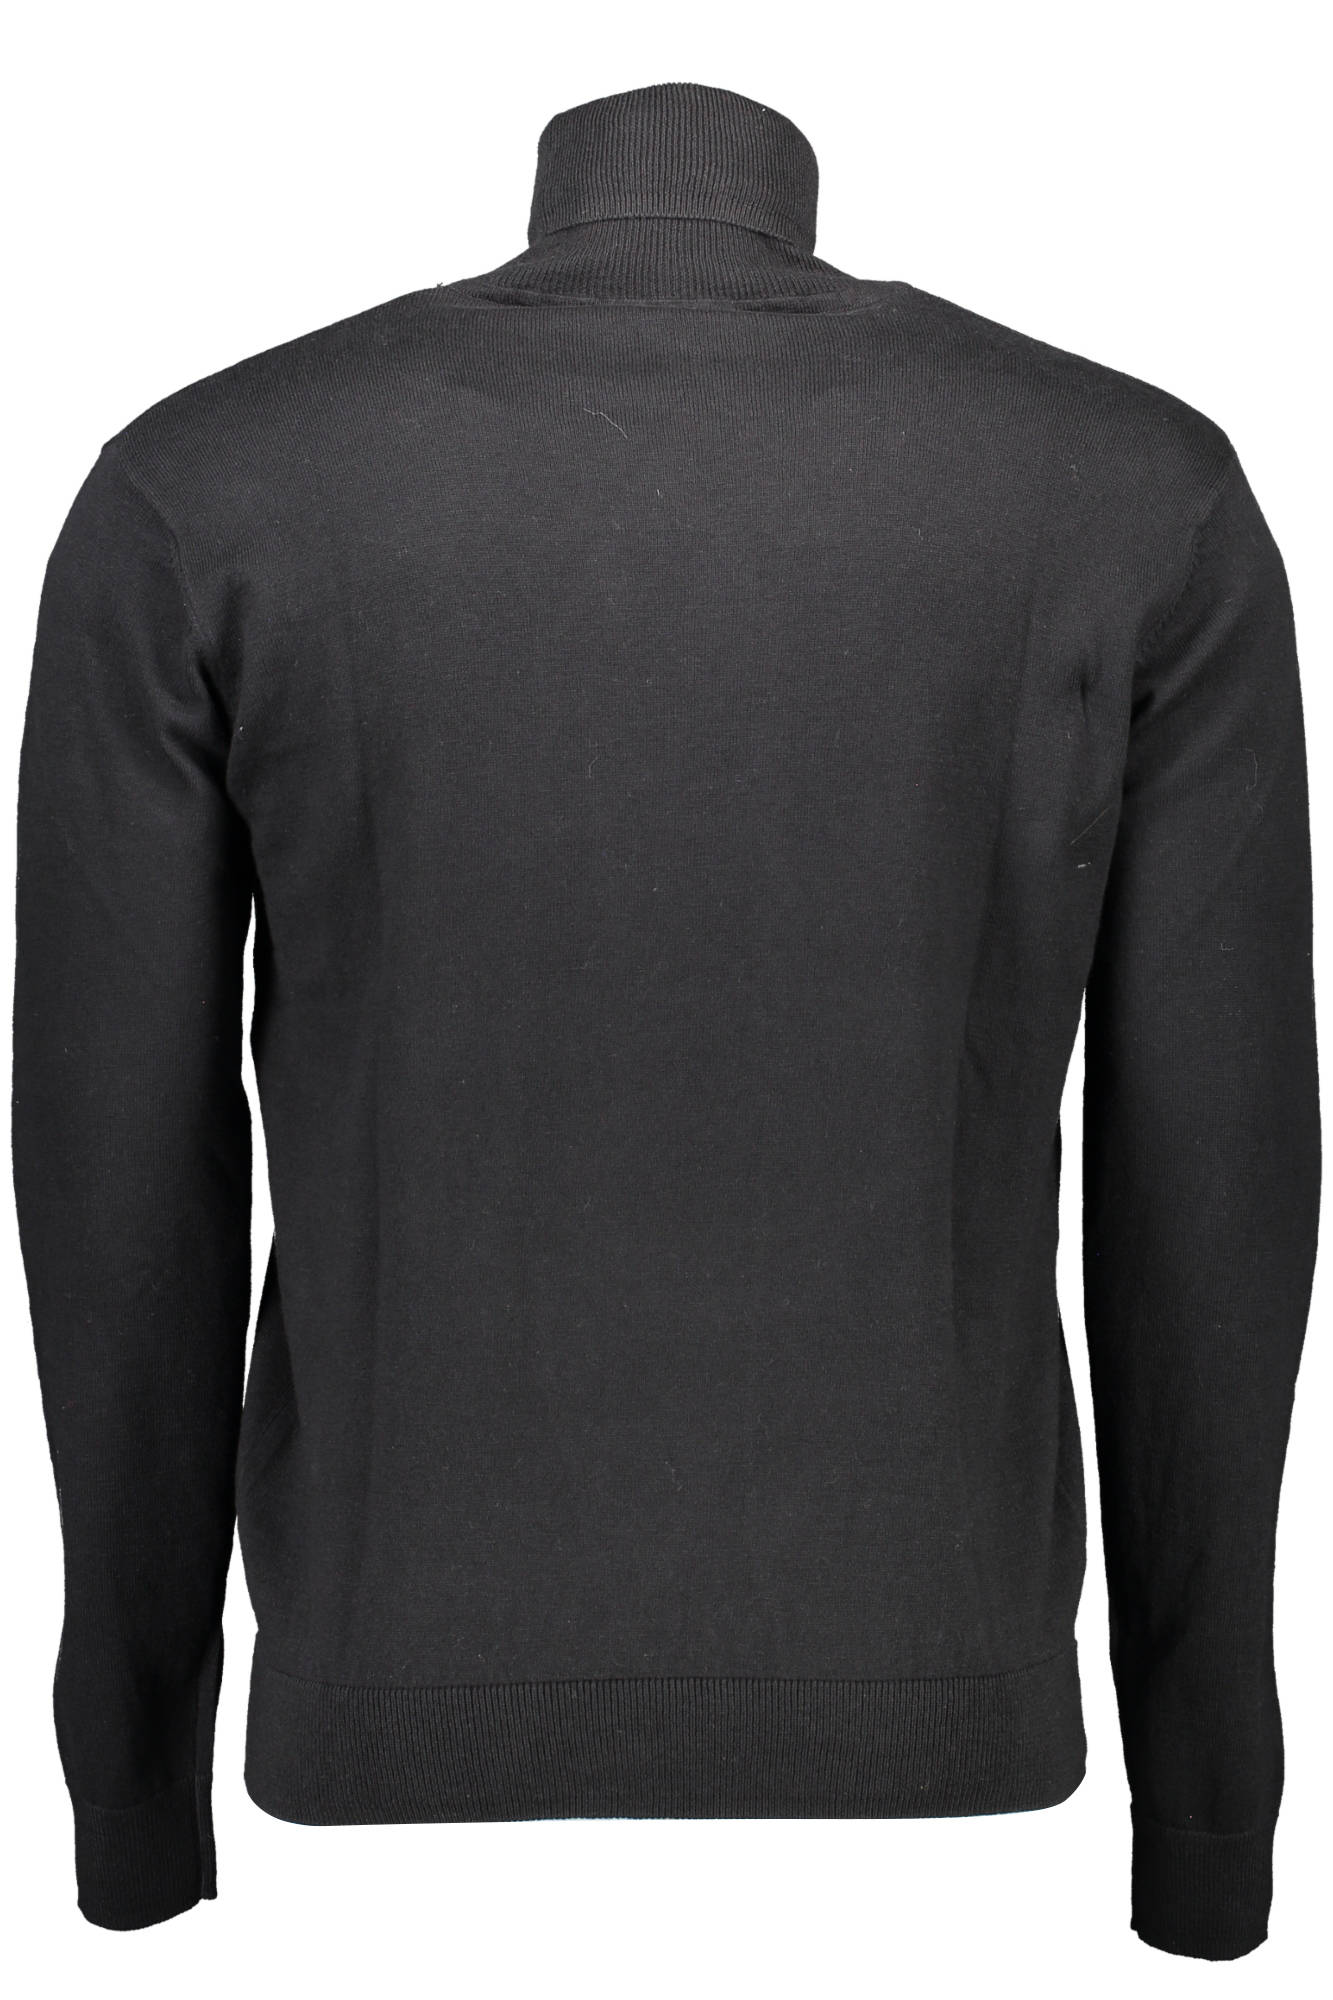 U.S. POLO ASSN. Black Sweater - Fizigo